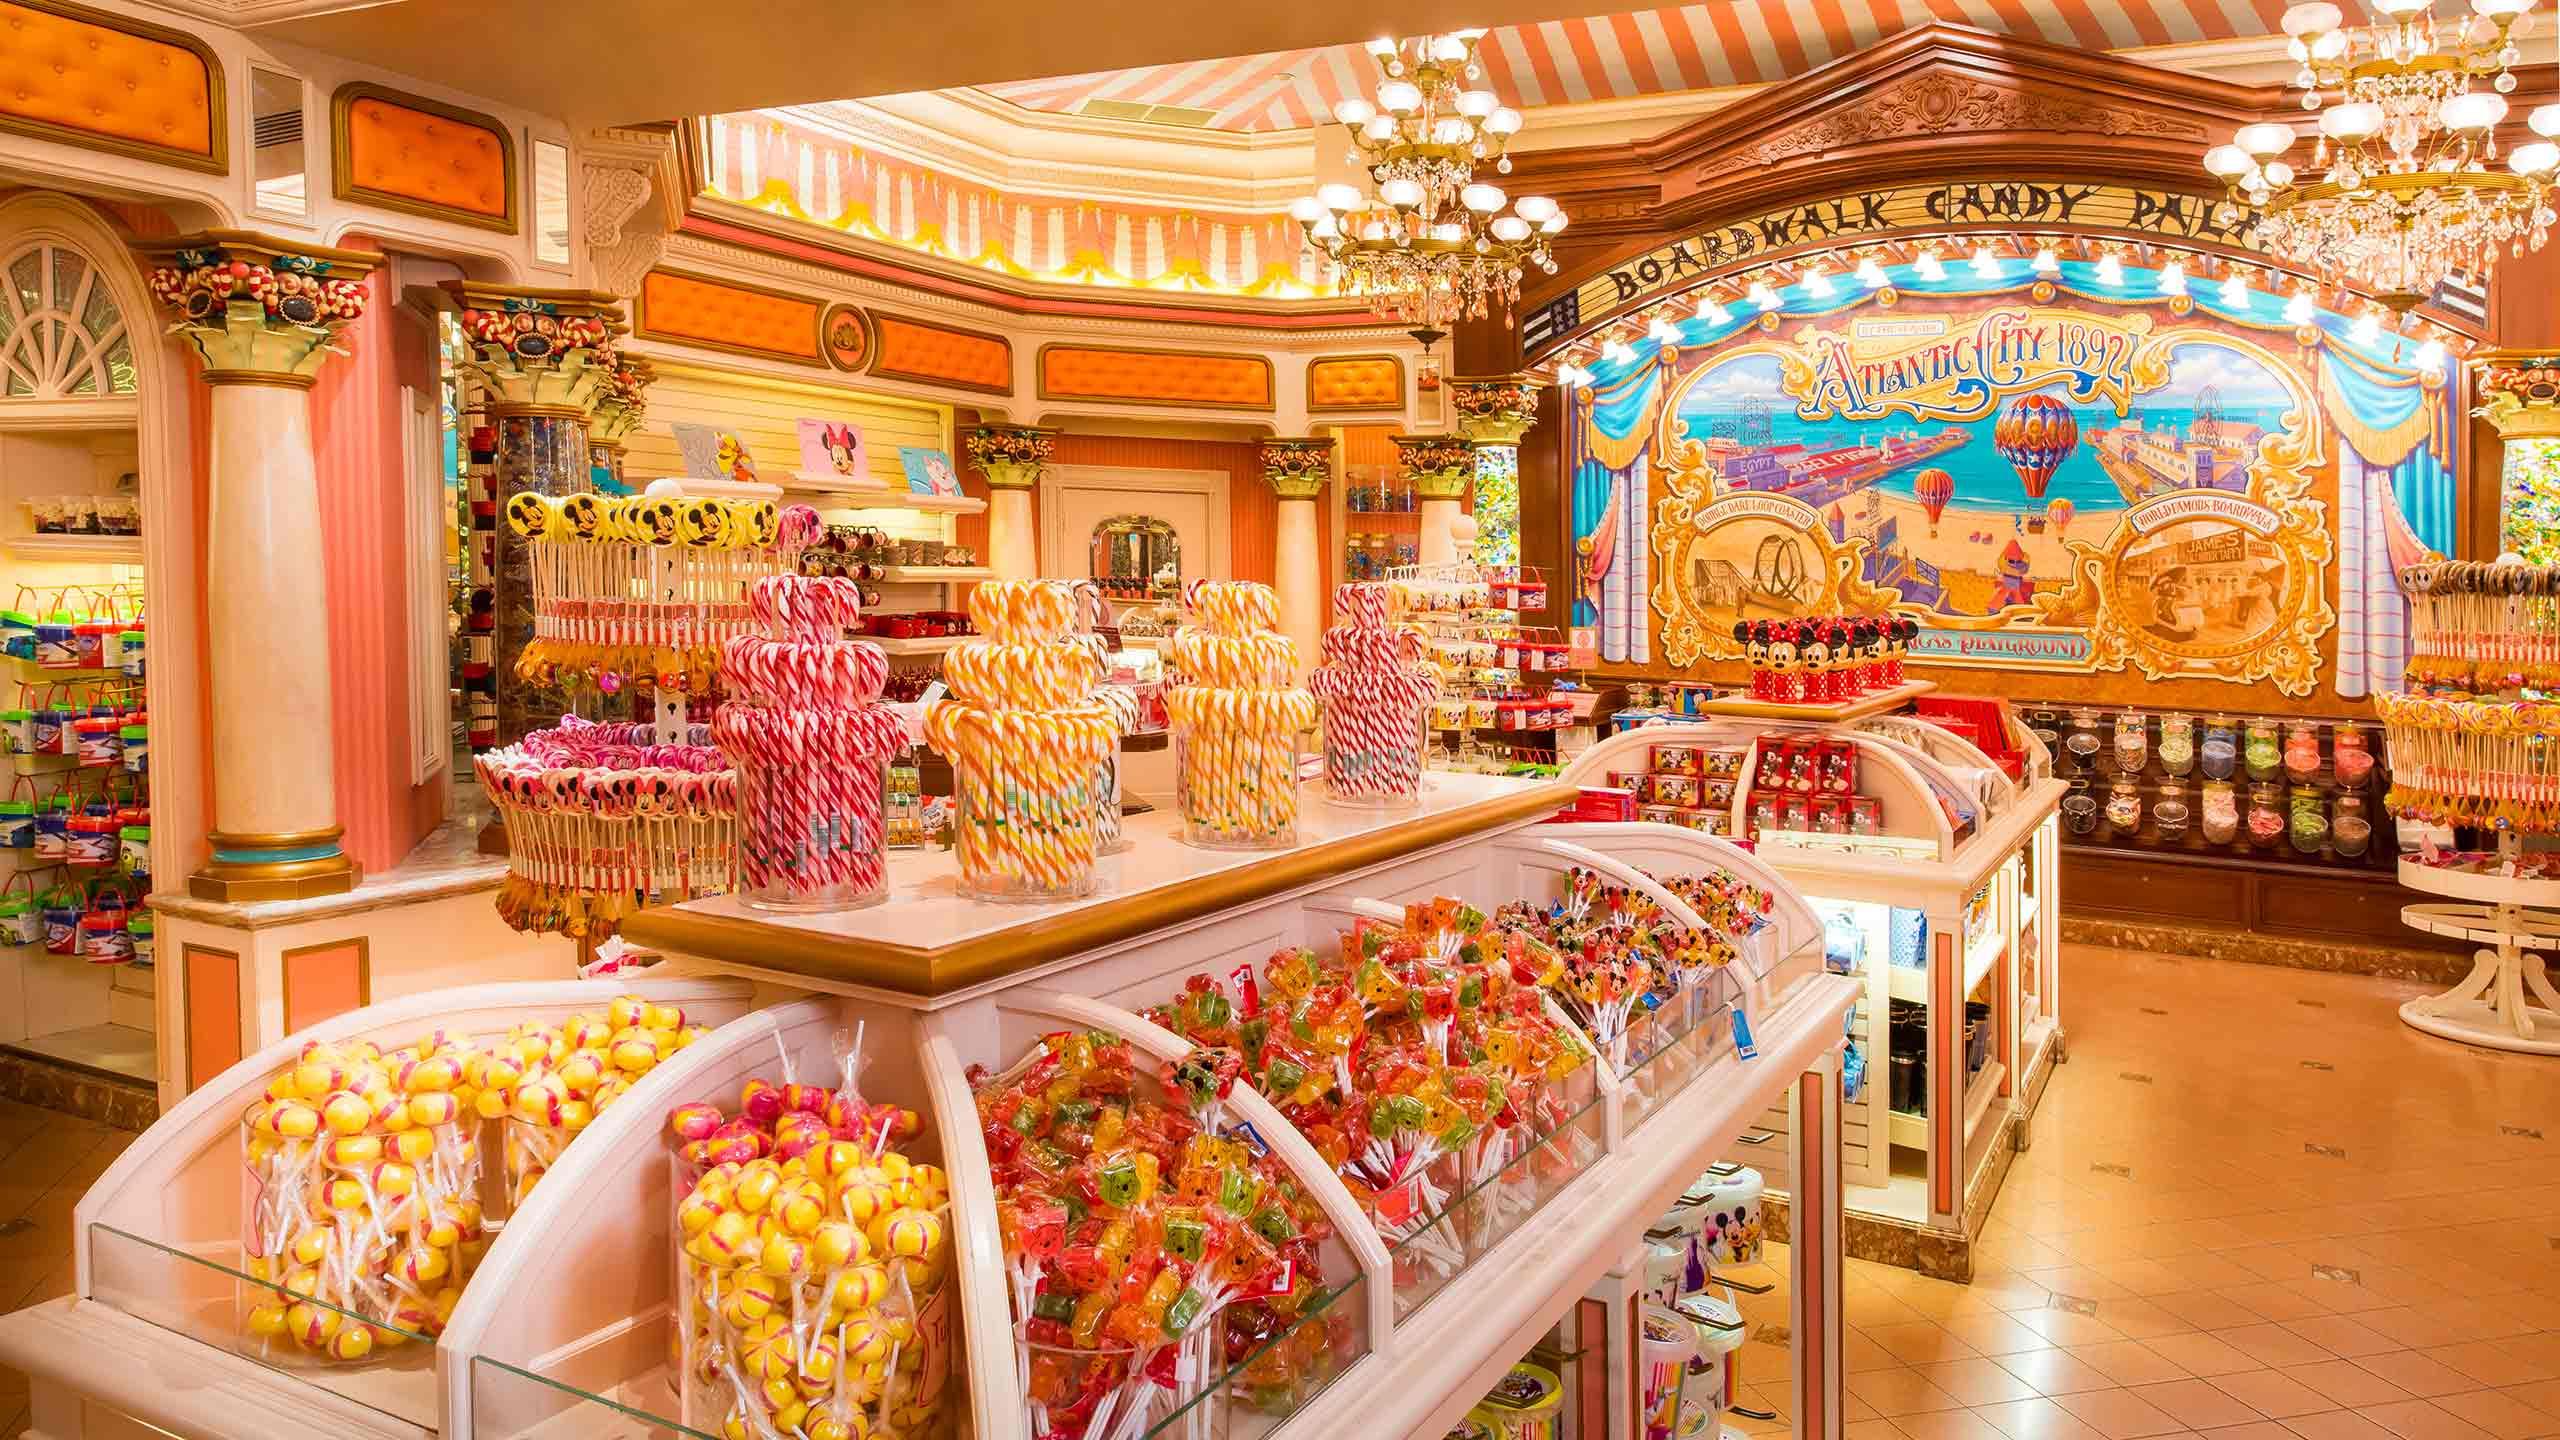 Boardwalk Candy Palace - Main Street, U.S.A. | Disneyland Paris